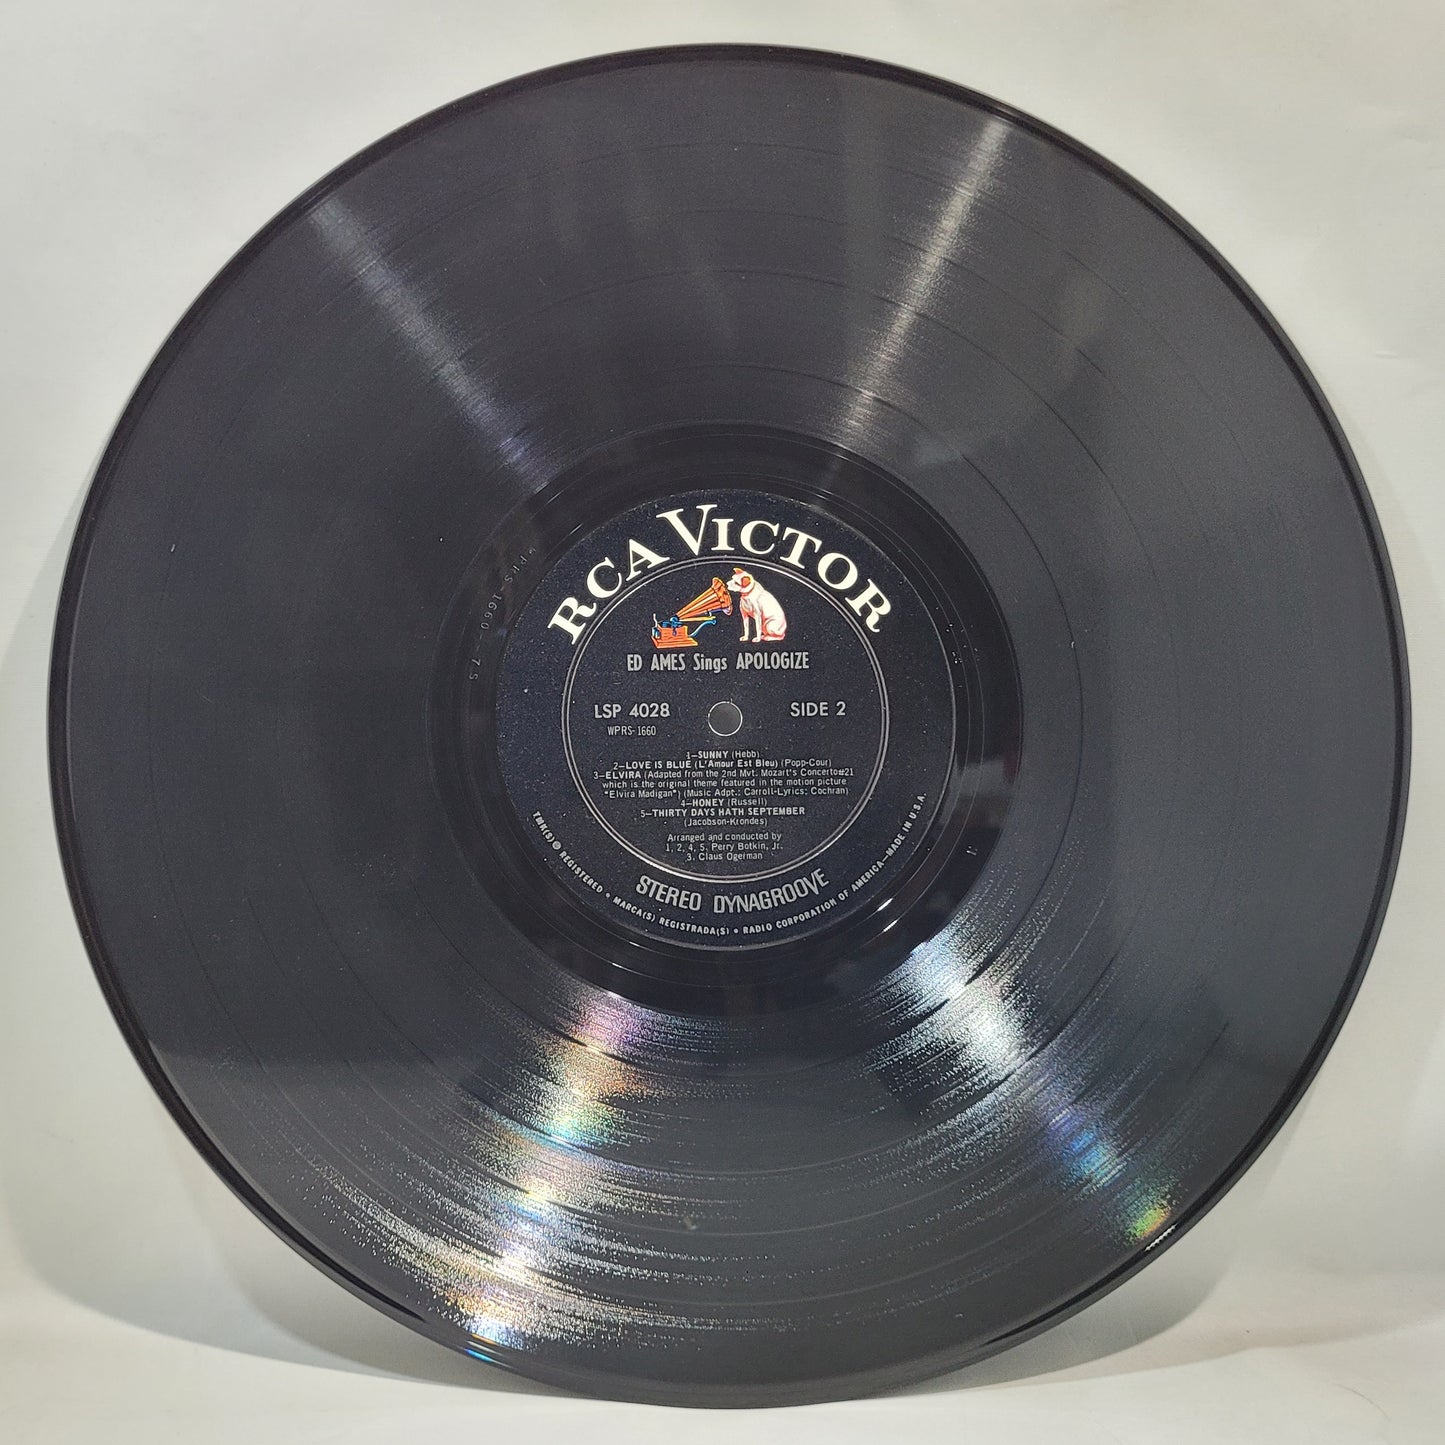 Ed Ames - Ed Ames Sings Apologize [Vinyl Record LP]